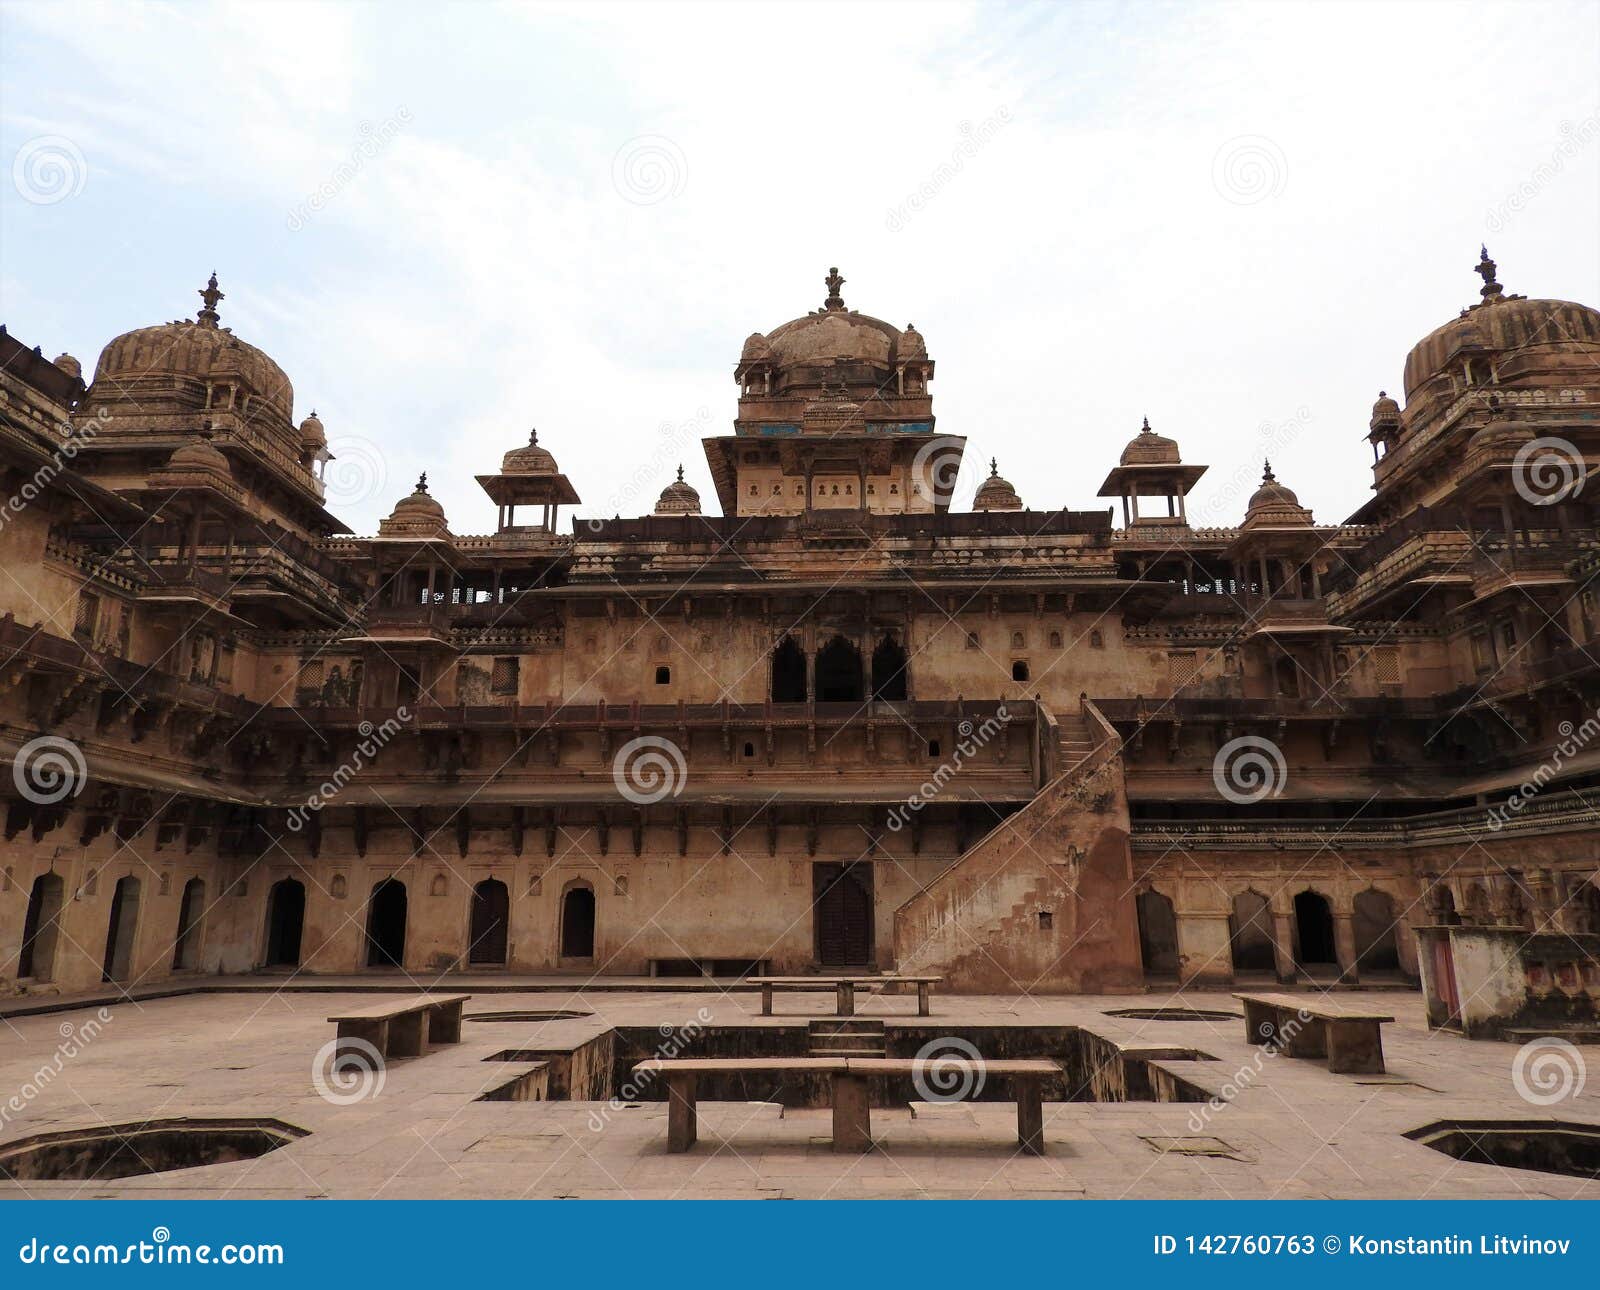 the jehangir mahal, orchha fort, religia hinduism, ancient architecture, orchha, madhya pradesh, india